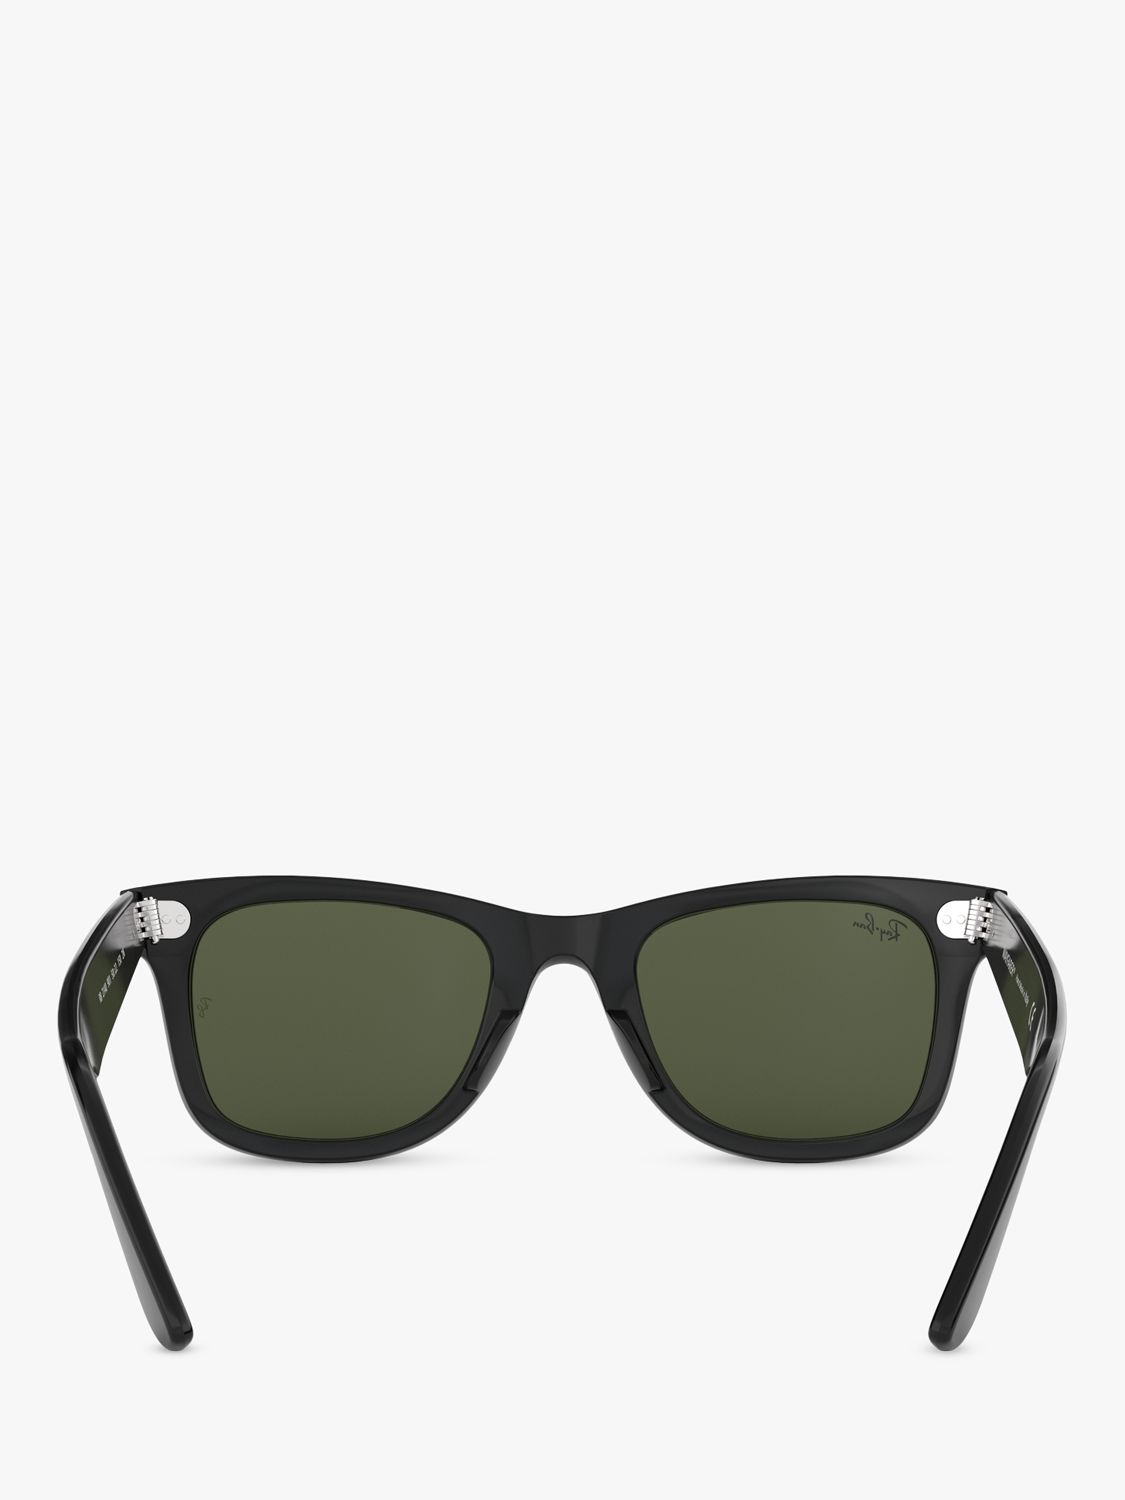 Ray-Ban RB2140 Unisex Wayfarer Sunglasses, Black/Green